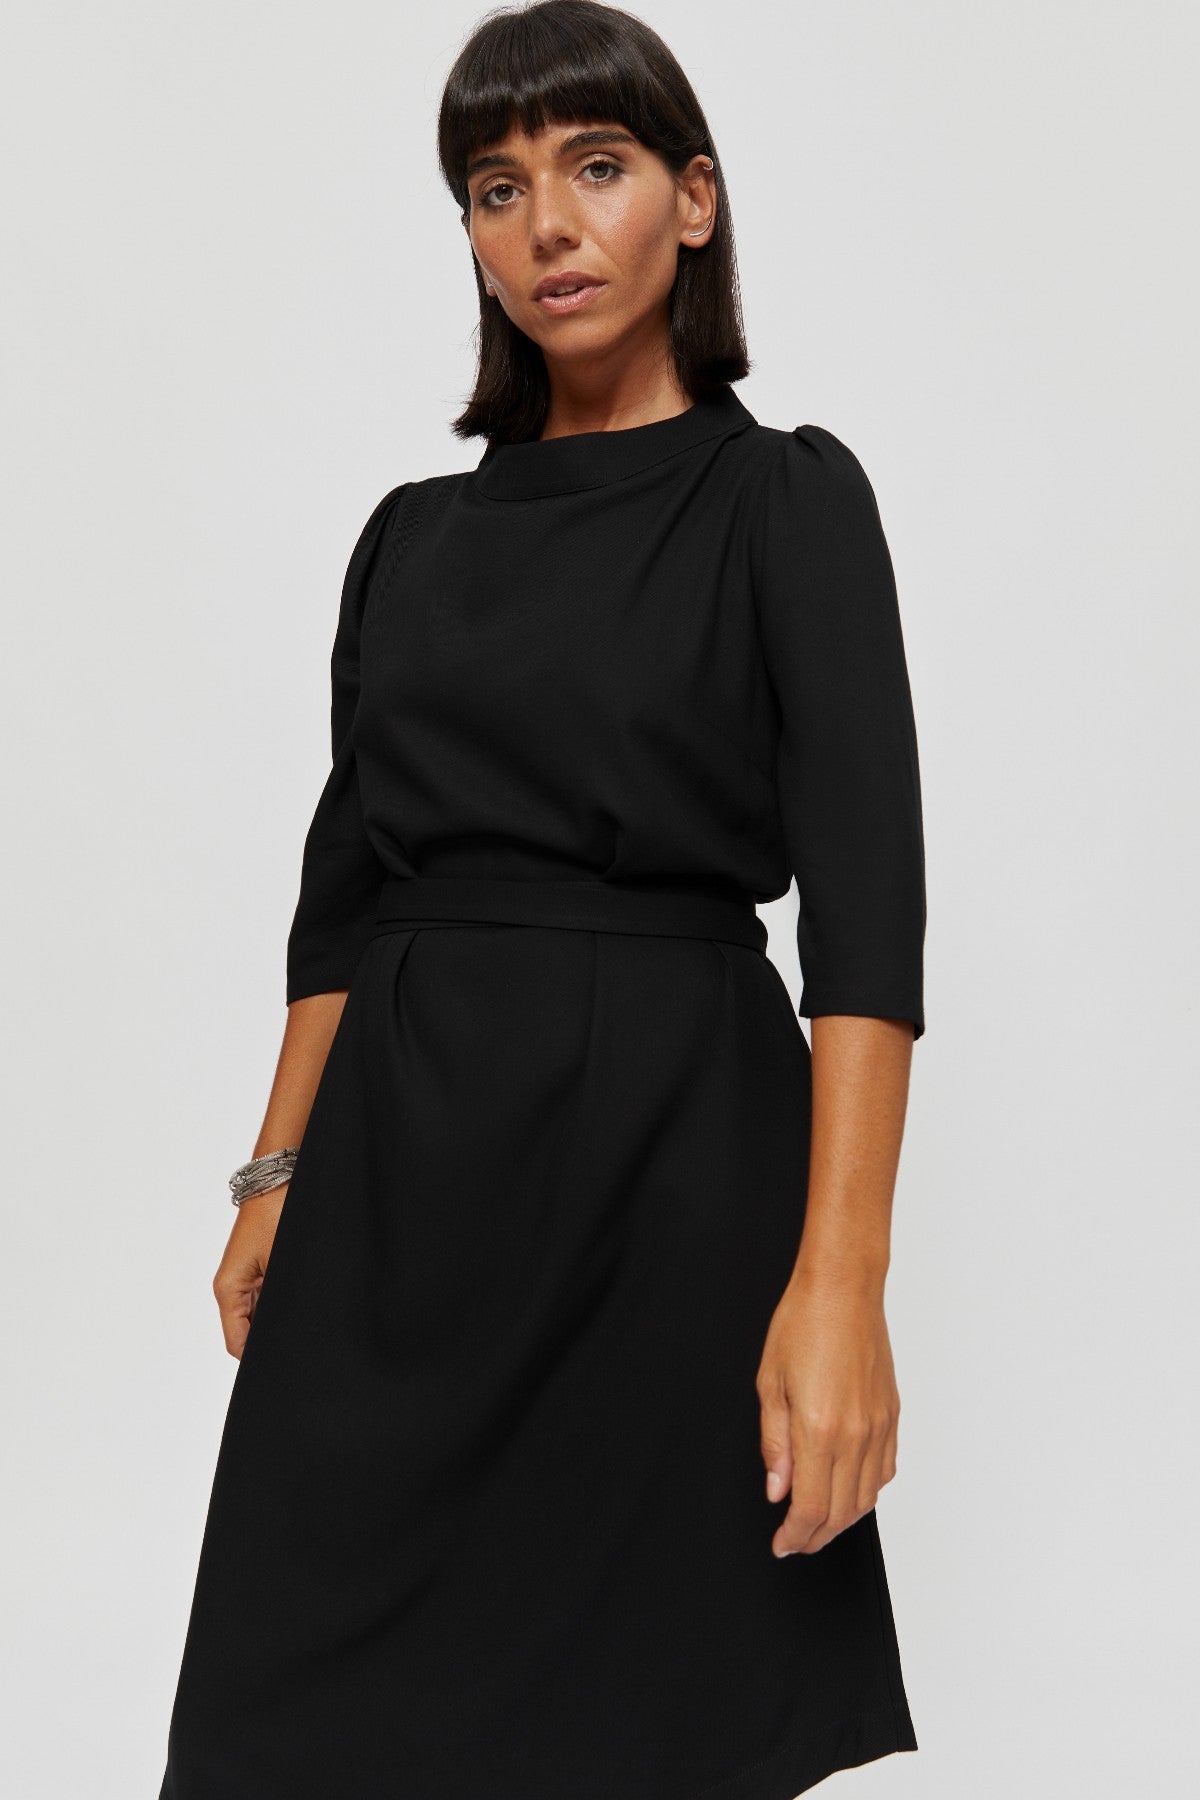 Black Midi Dress SUZI. Formal Evening Dress. Black Work Dress · A Line Dress with Sleeves - AYANI